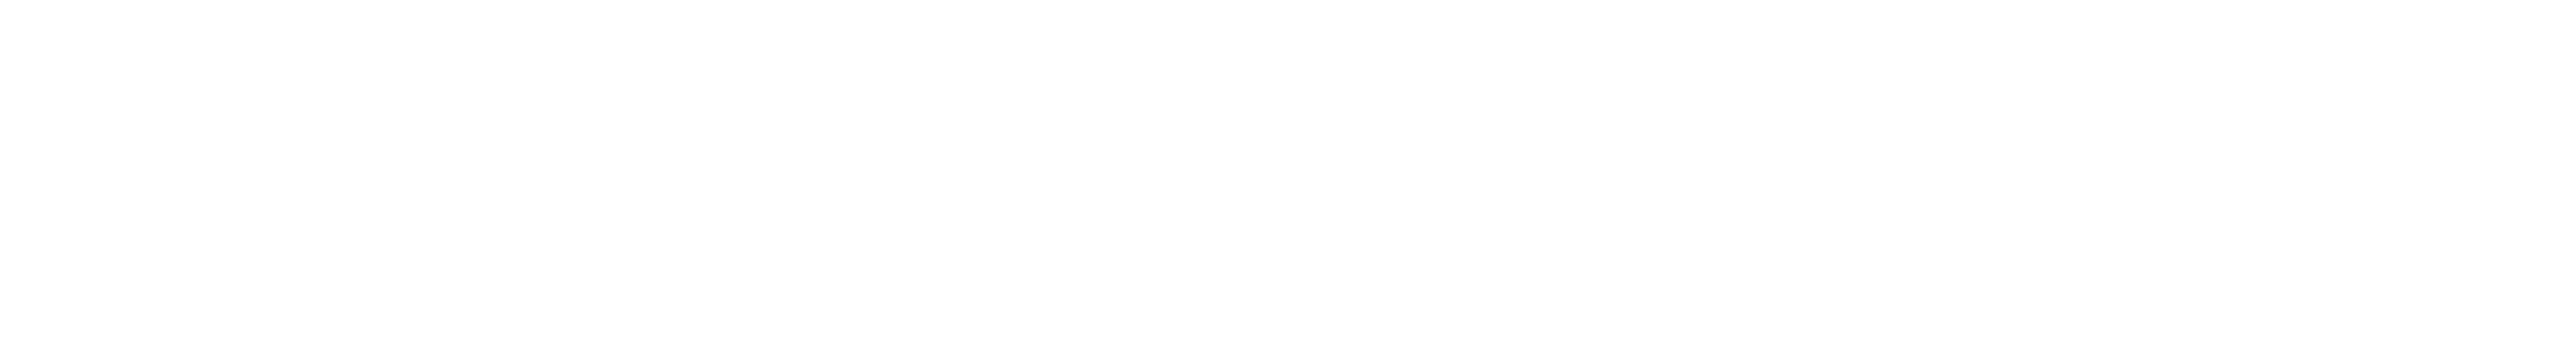 Parrott logo